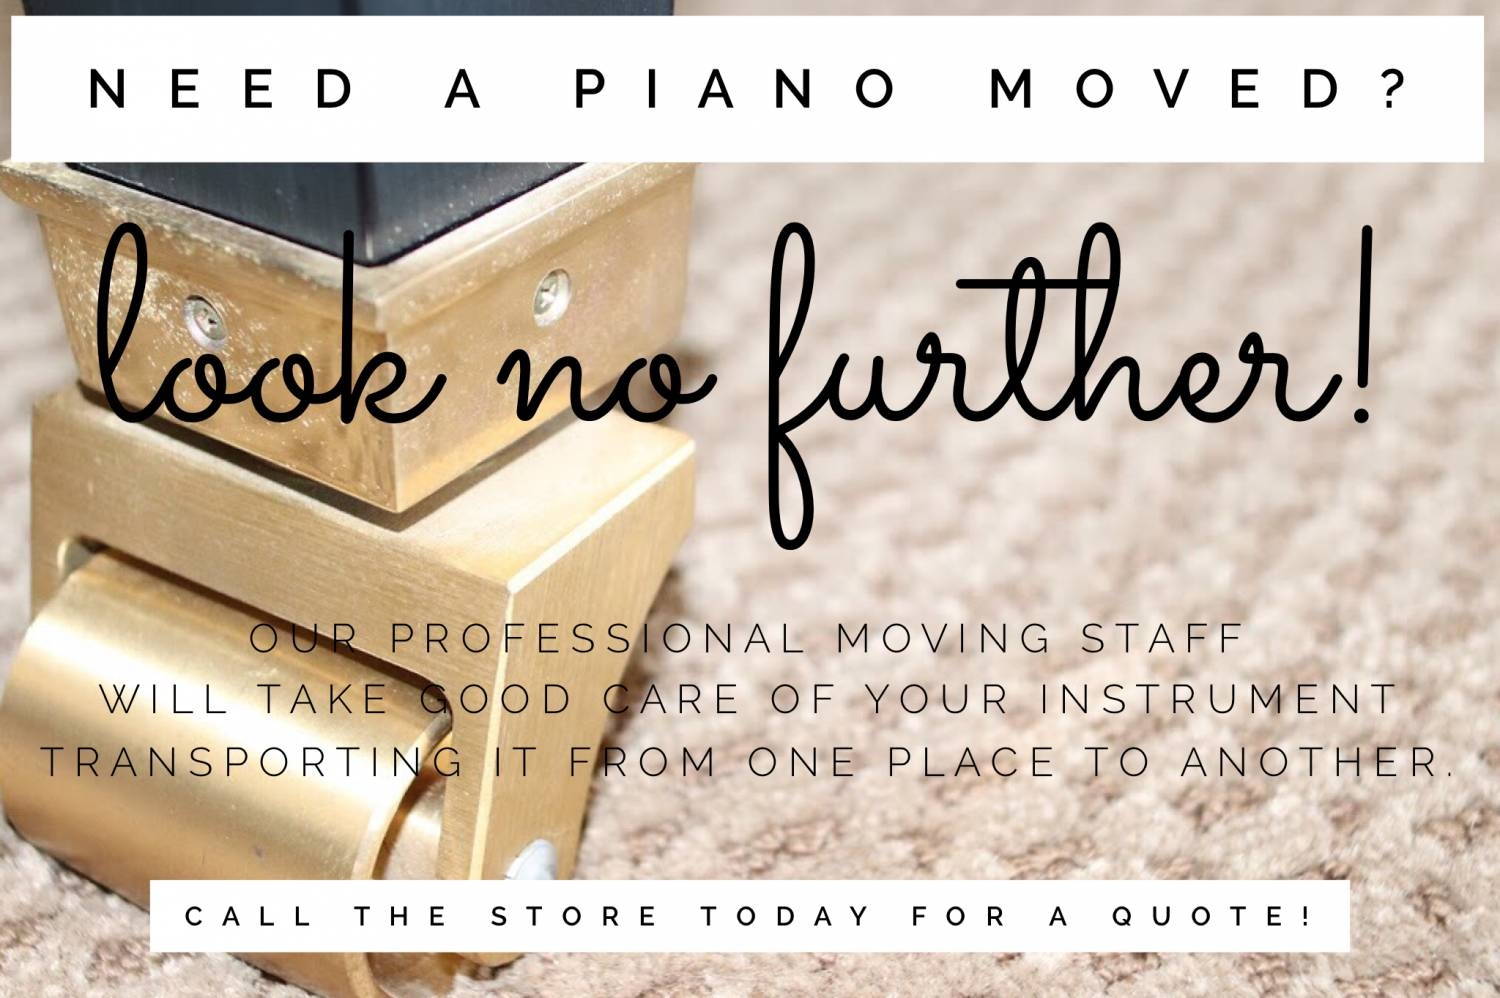 Moving Pianos